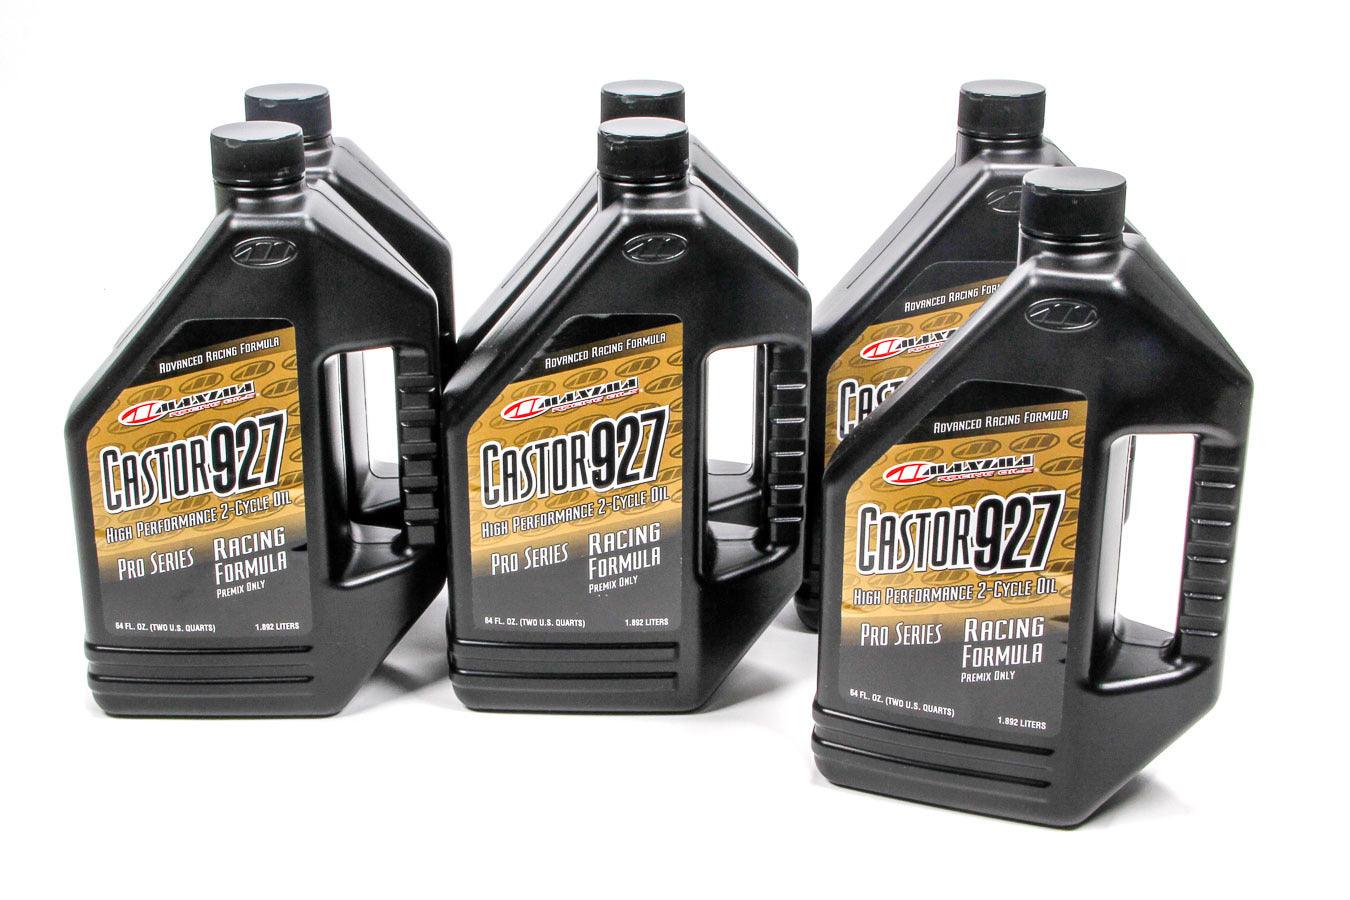 Castor 927 Racing Premix Case 6 x 1/2 Gallon - Burlile Performance Products